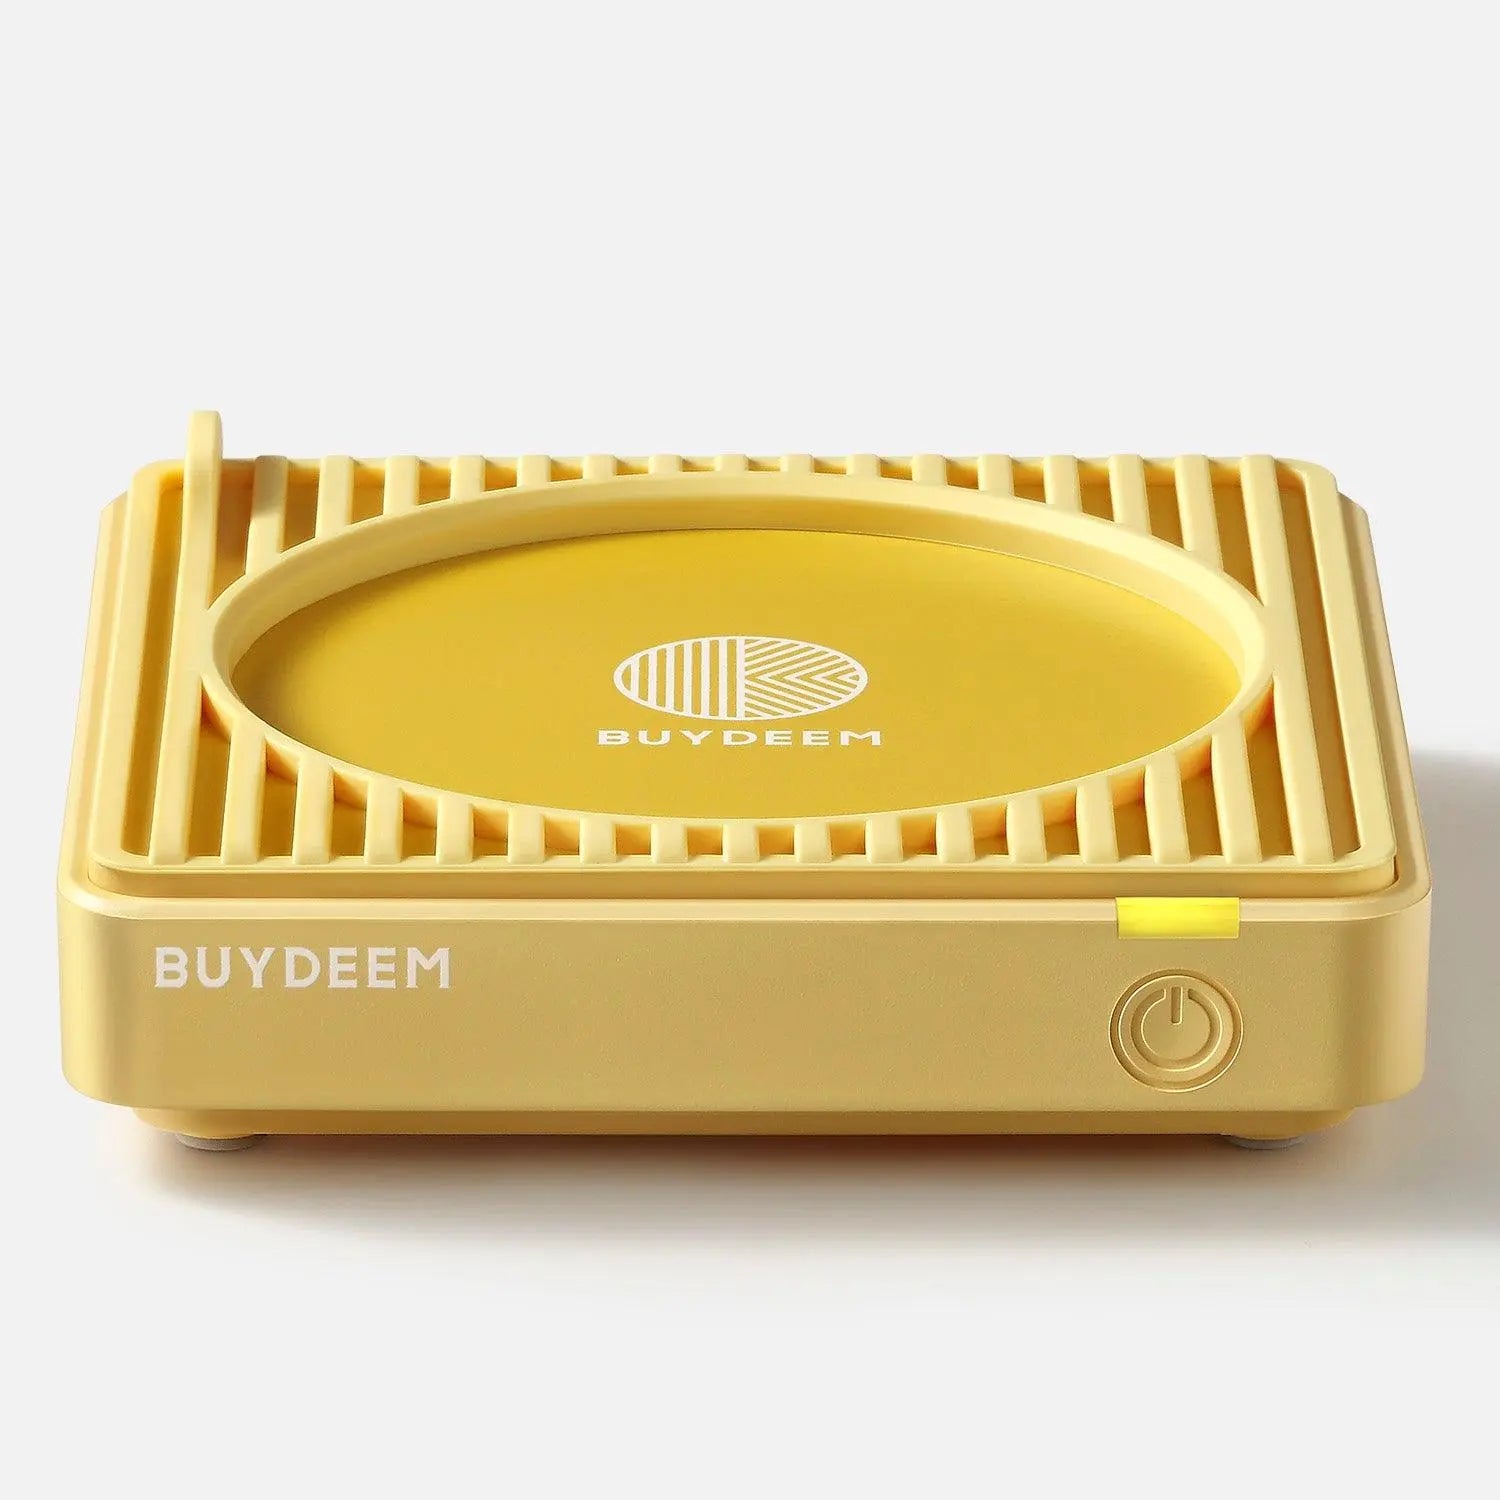 Buydeem 3-Quart Enameled Cast Iron Dutch Oven review - The Gadgeteer